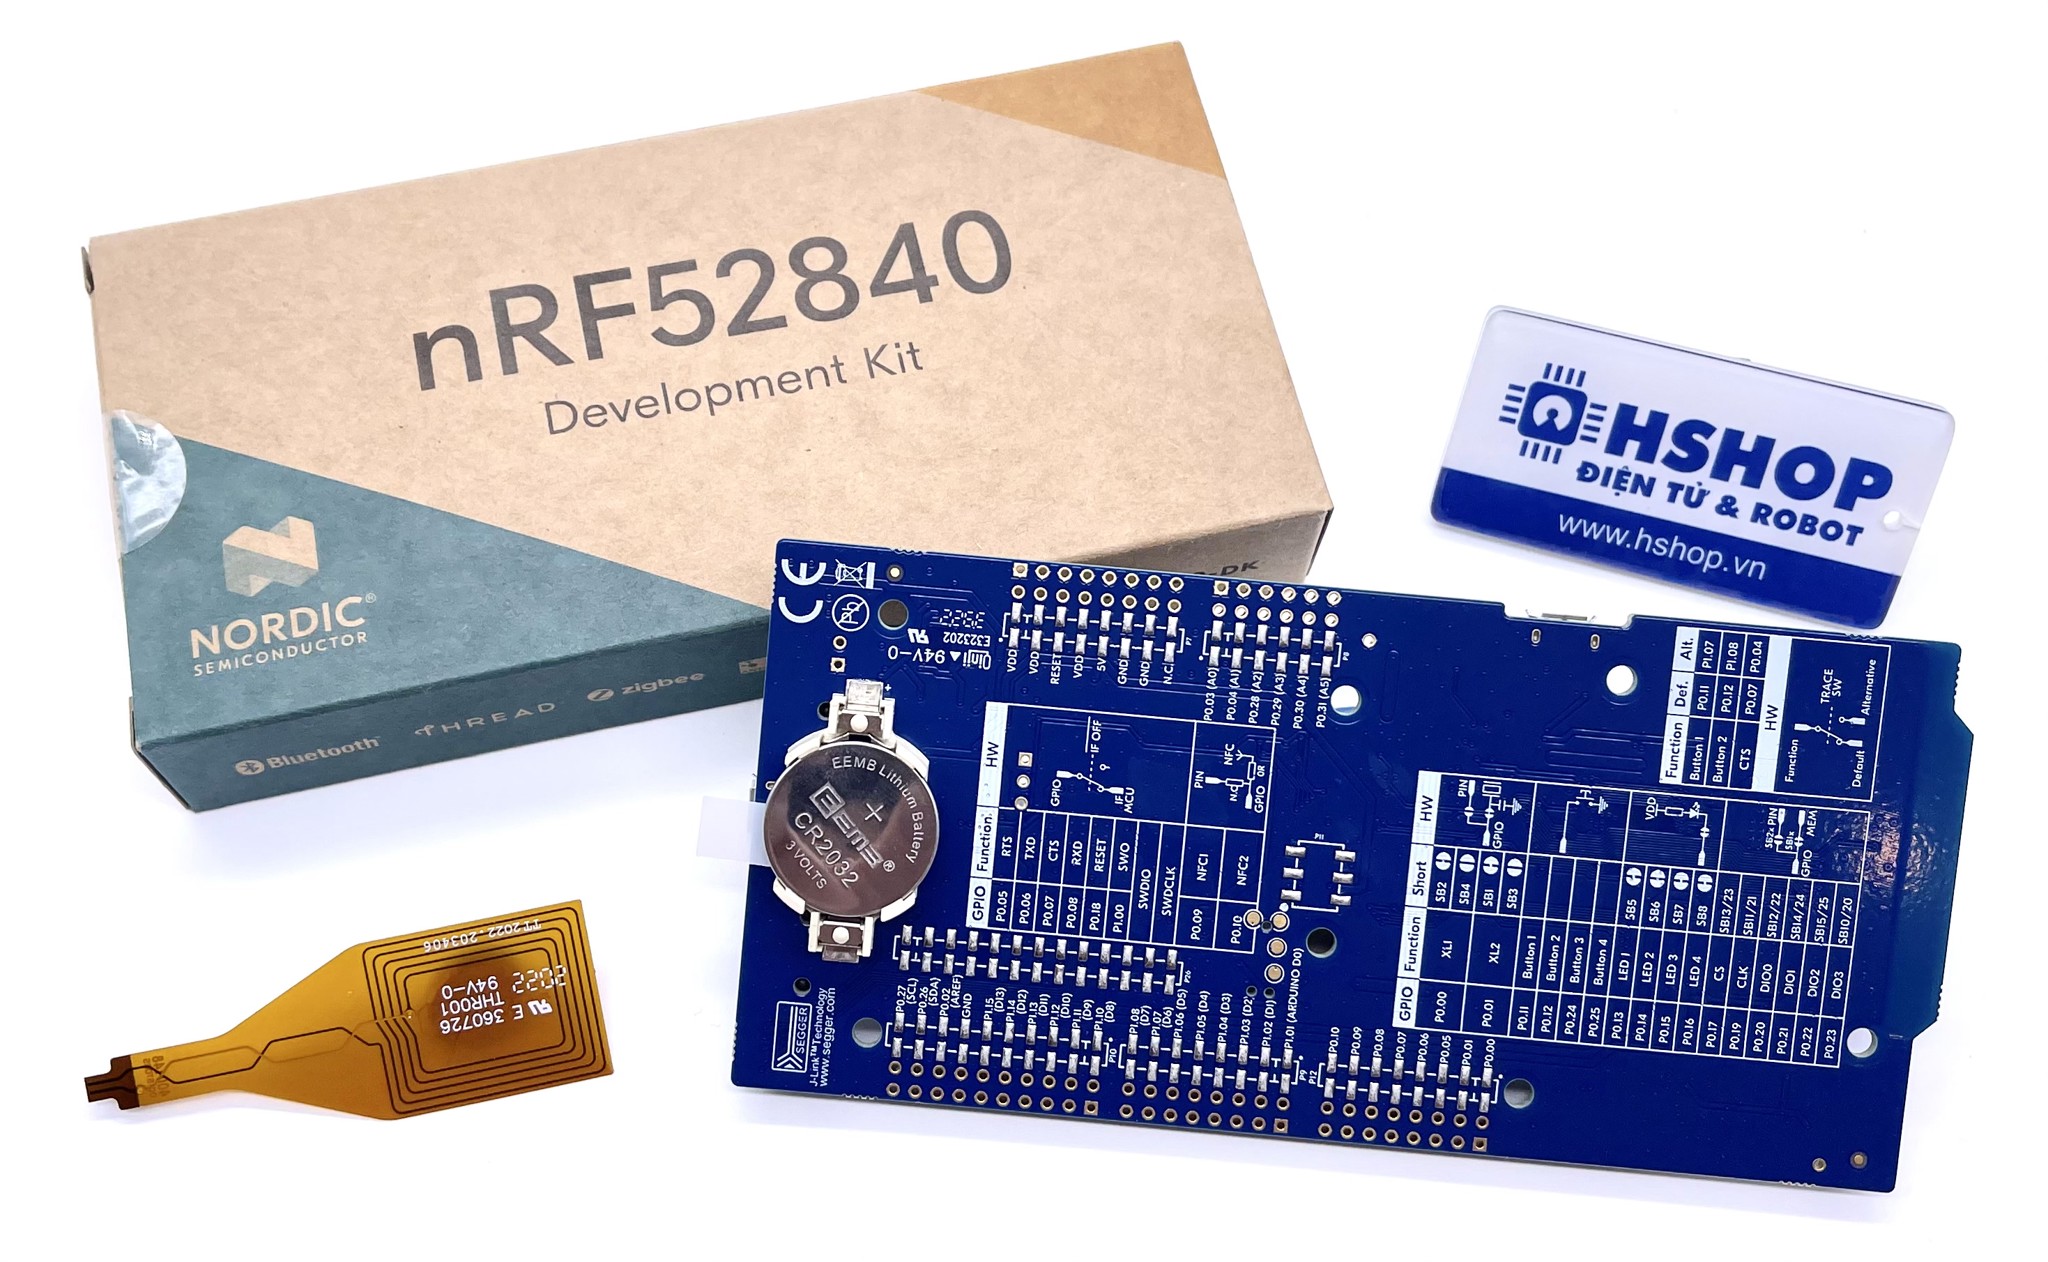 Mạch nRF52840 DK, Bluetooth Low Energy, Bluetooth mesh, NFC, Thread and Zigbee development kit for the nRF52840 SoC